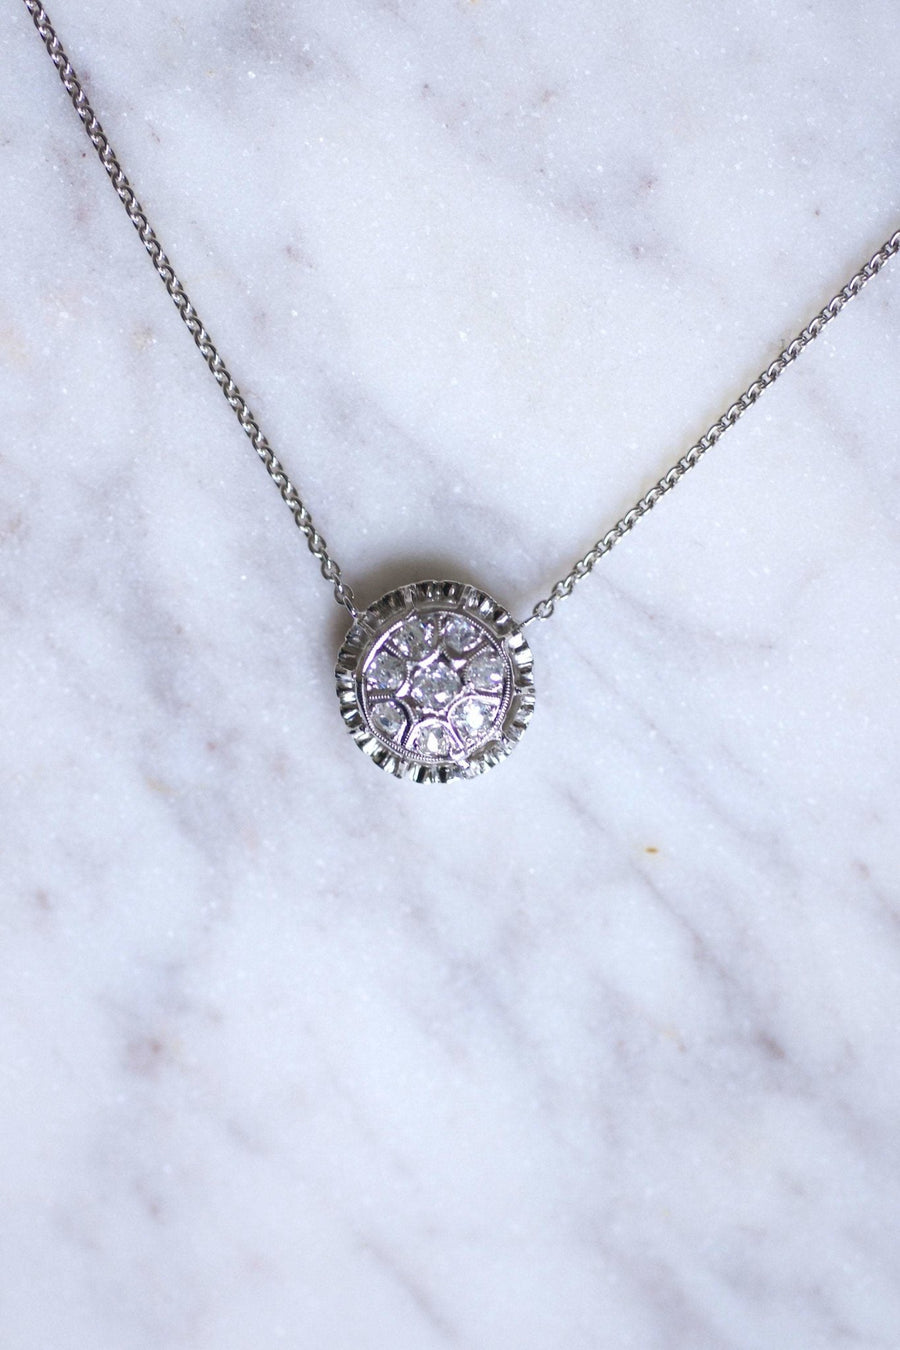 Vintage white gold and diamonds pendant necklace - Galerie Pénélope